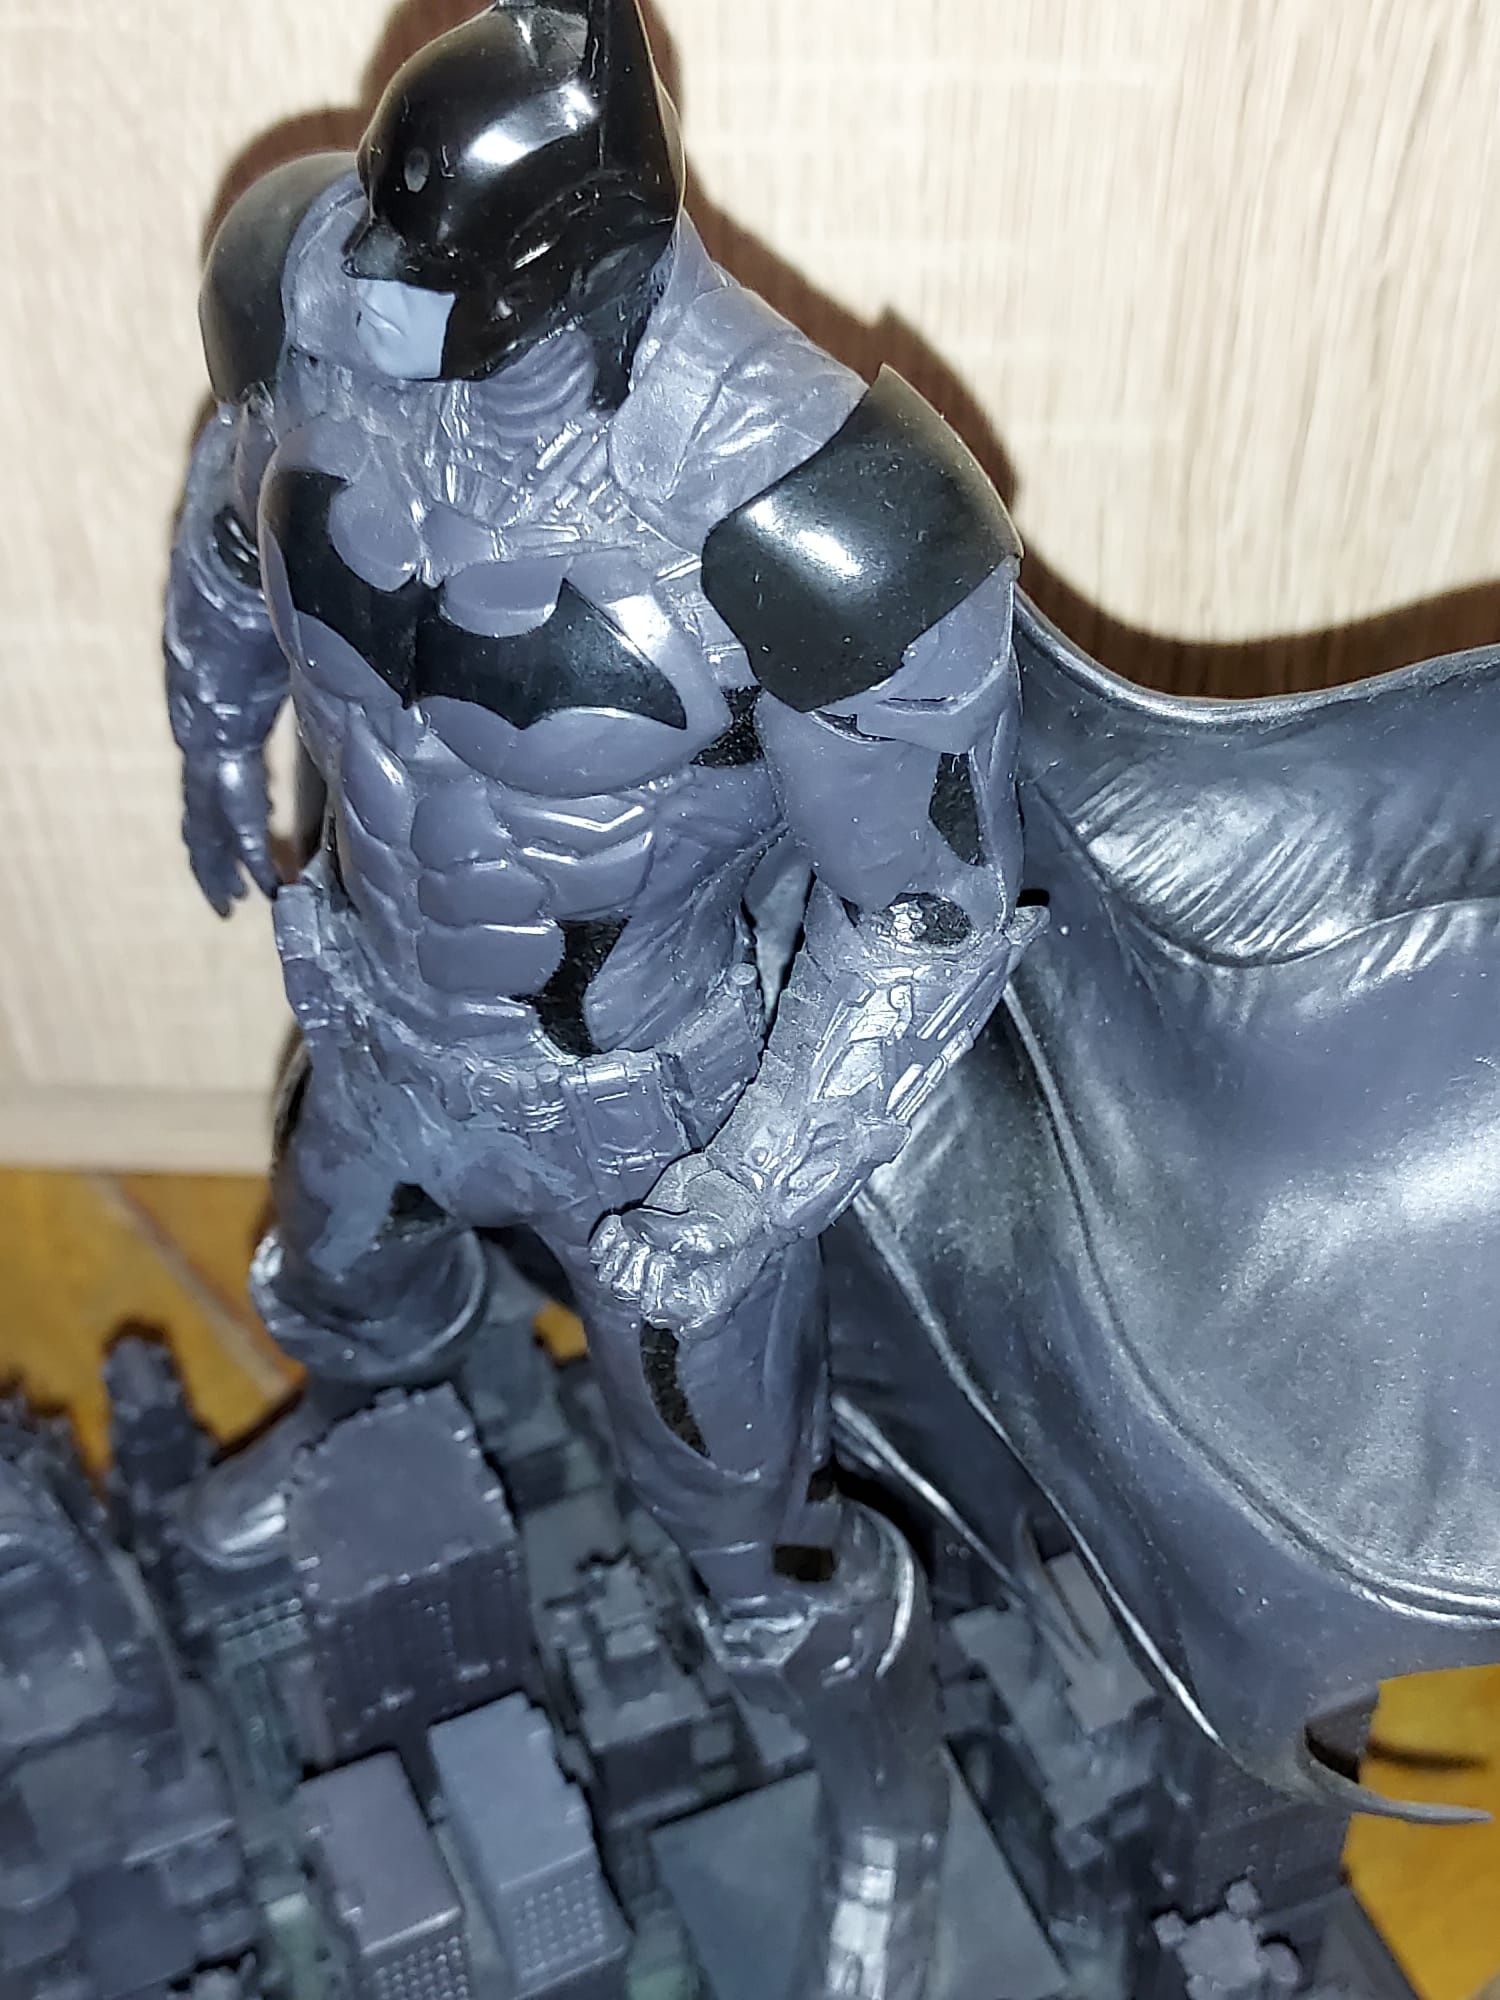 Batman Arkham Knight Collector's Edition Statuie